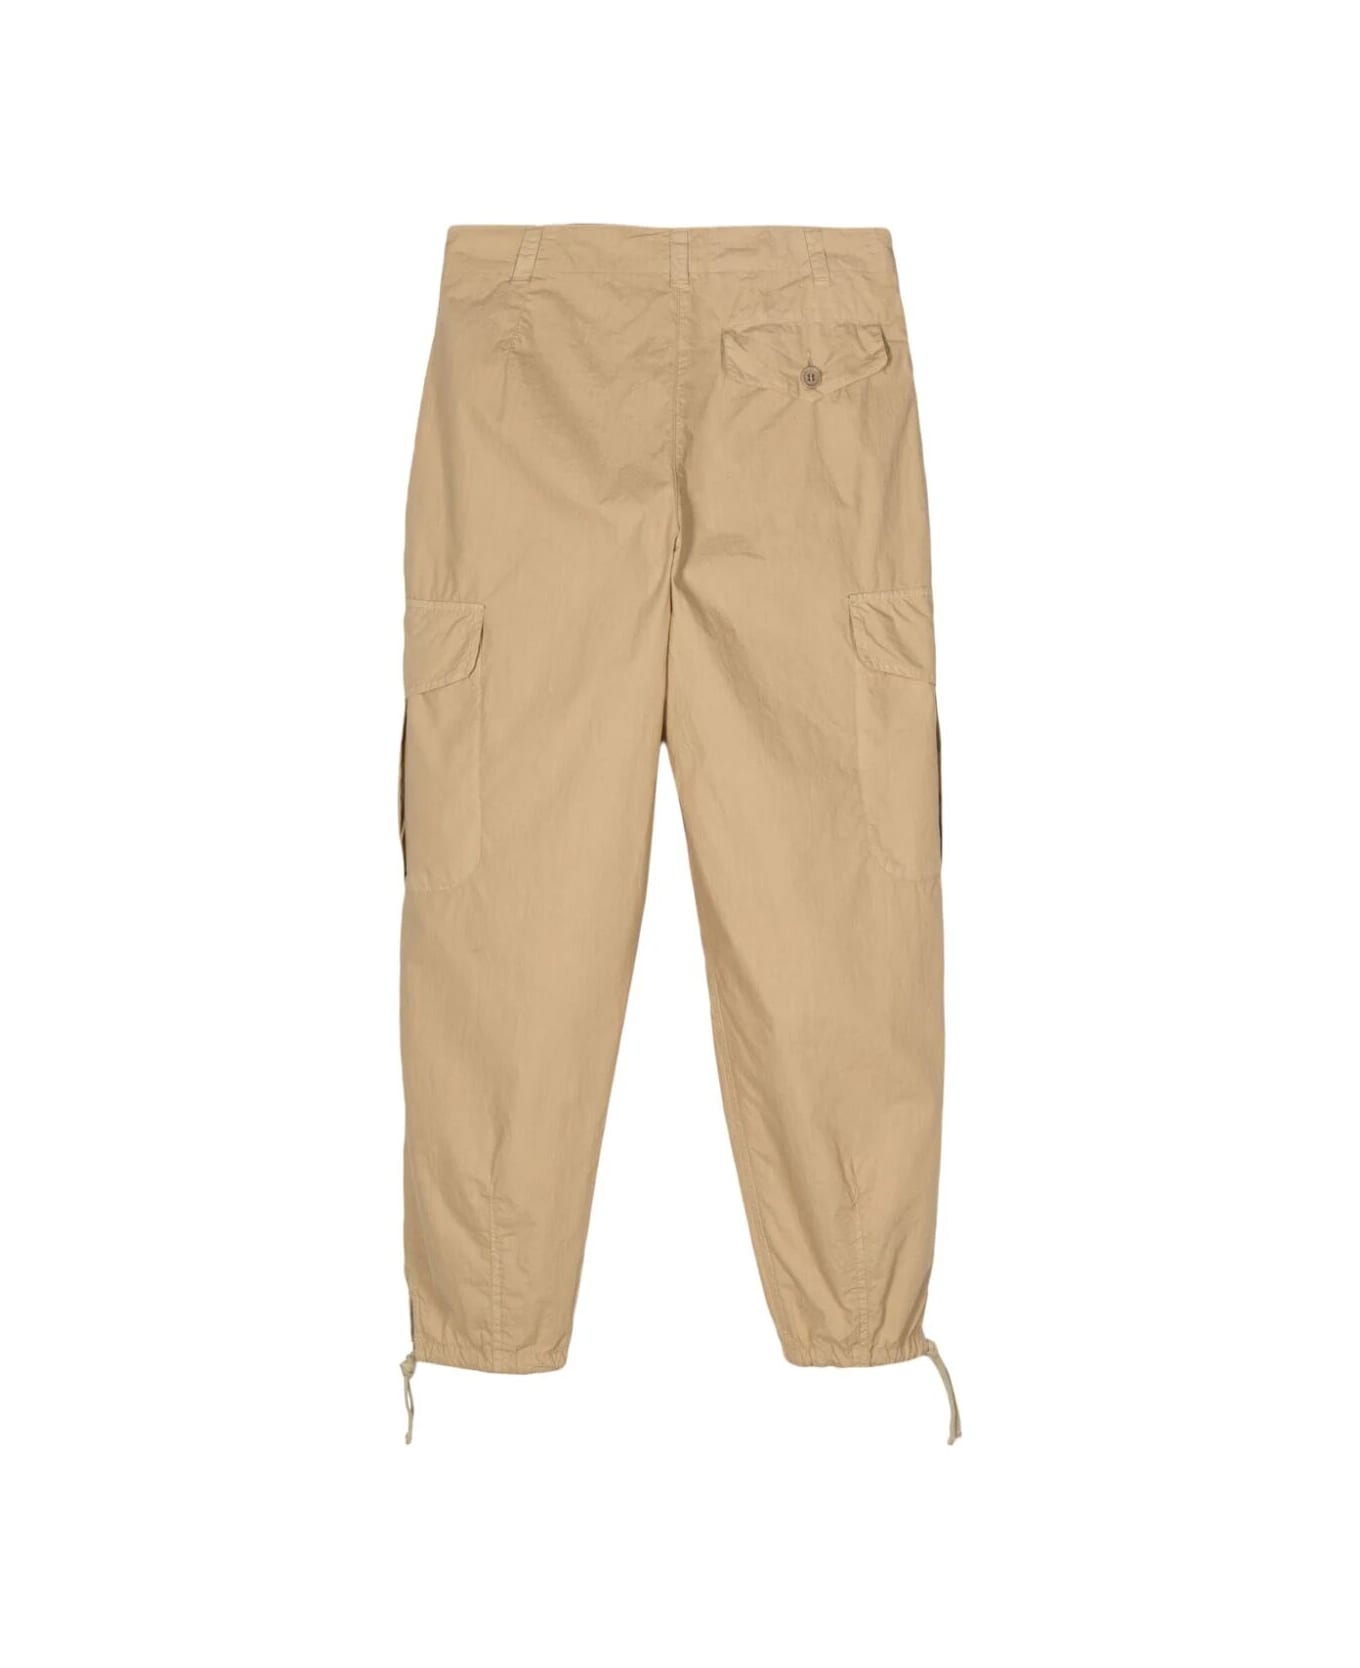 Aspesi Mod 0169 Pants - Colonial Beige